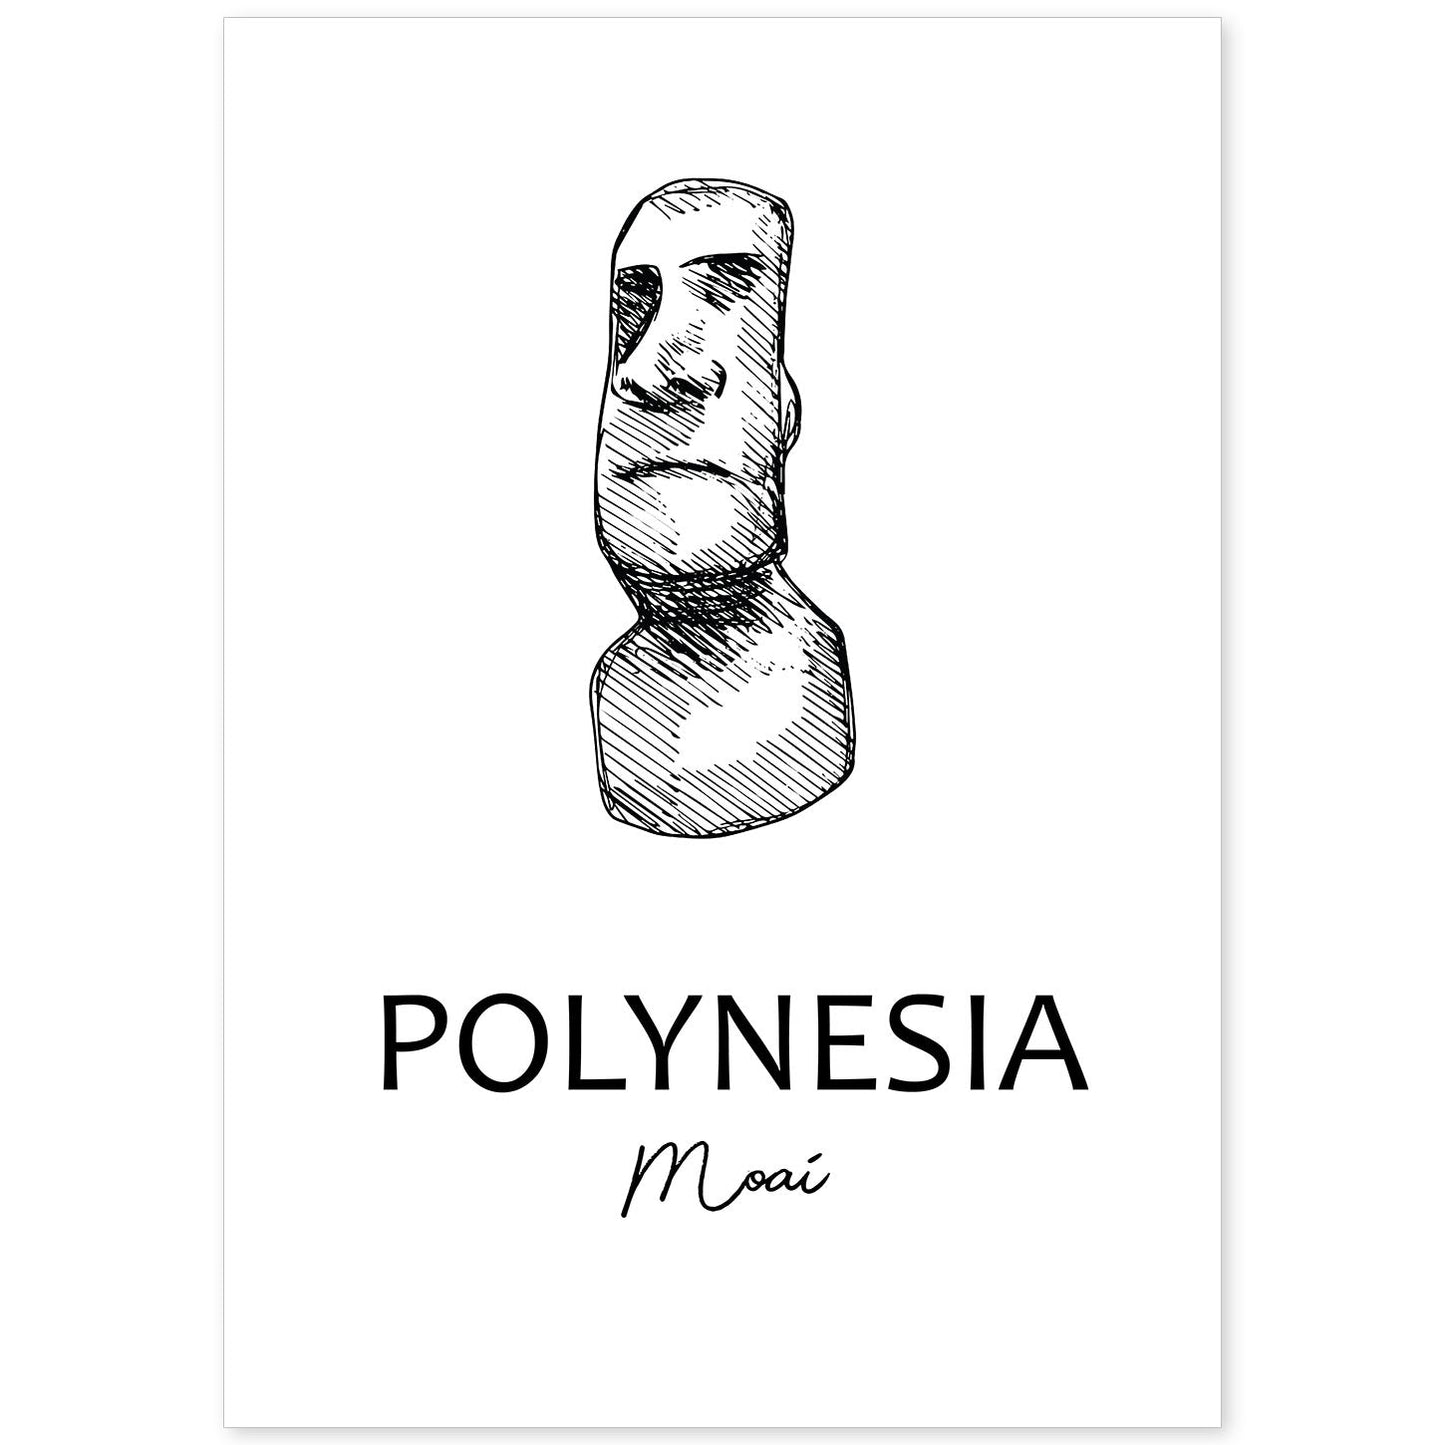 Poster de Polinesia - Moai. Láminas con monumentos de ciudades.-Artwork-Nacnic-A4-Sin marco-Nacnic Estudio SL